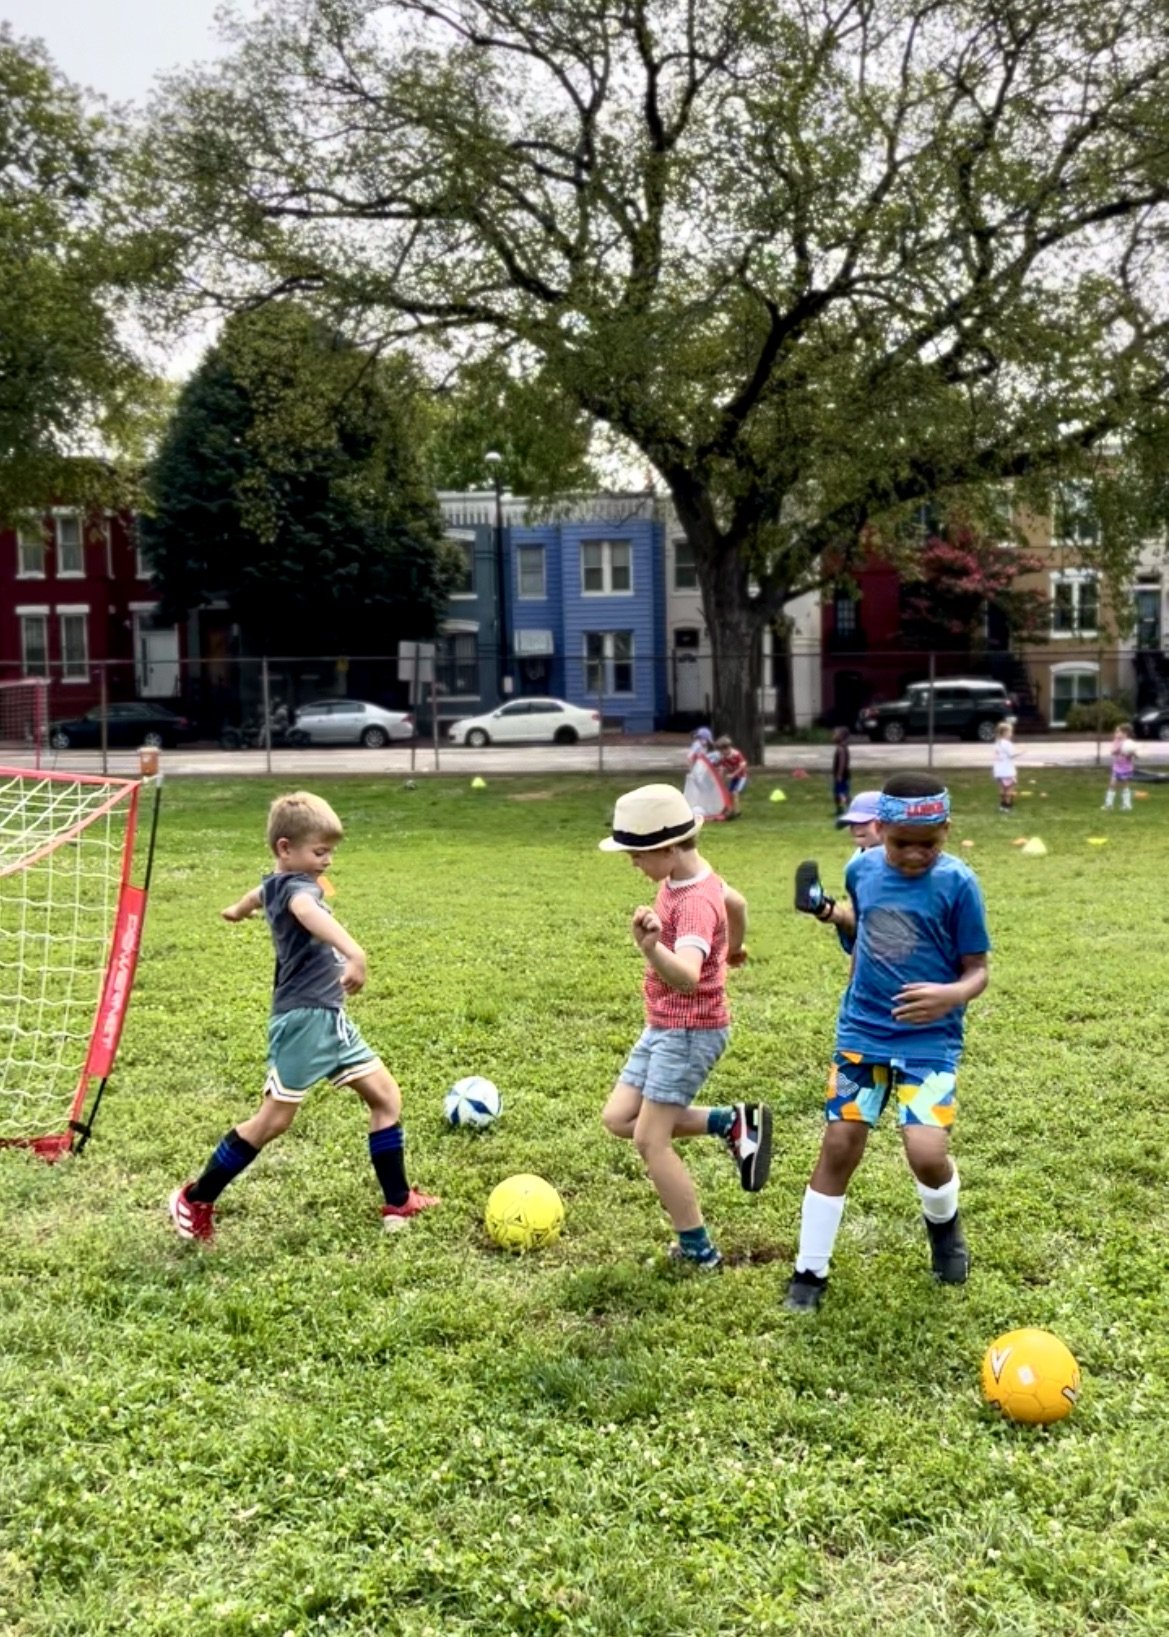 Dc-way-soccer-club-for-kids-in-washington-dc-summer-camp-at-tyler-elementary-school- 9146.jpeg